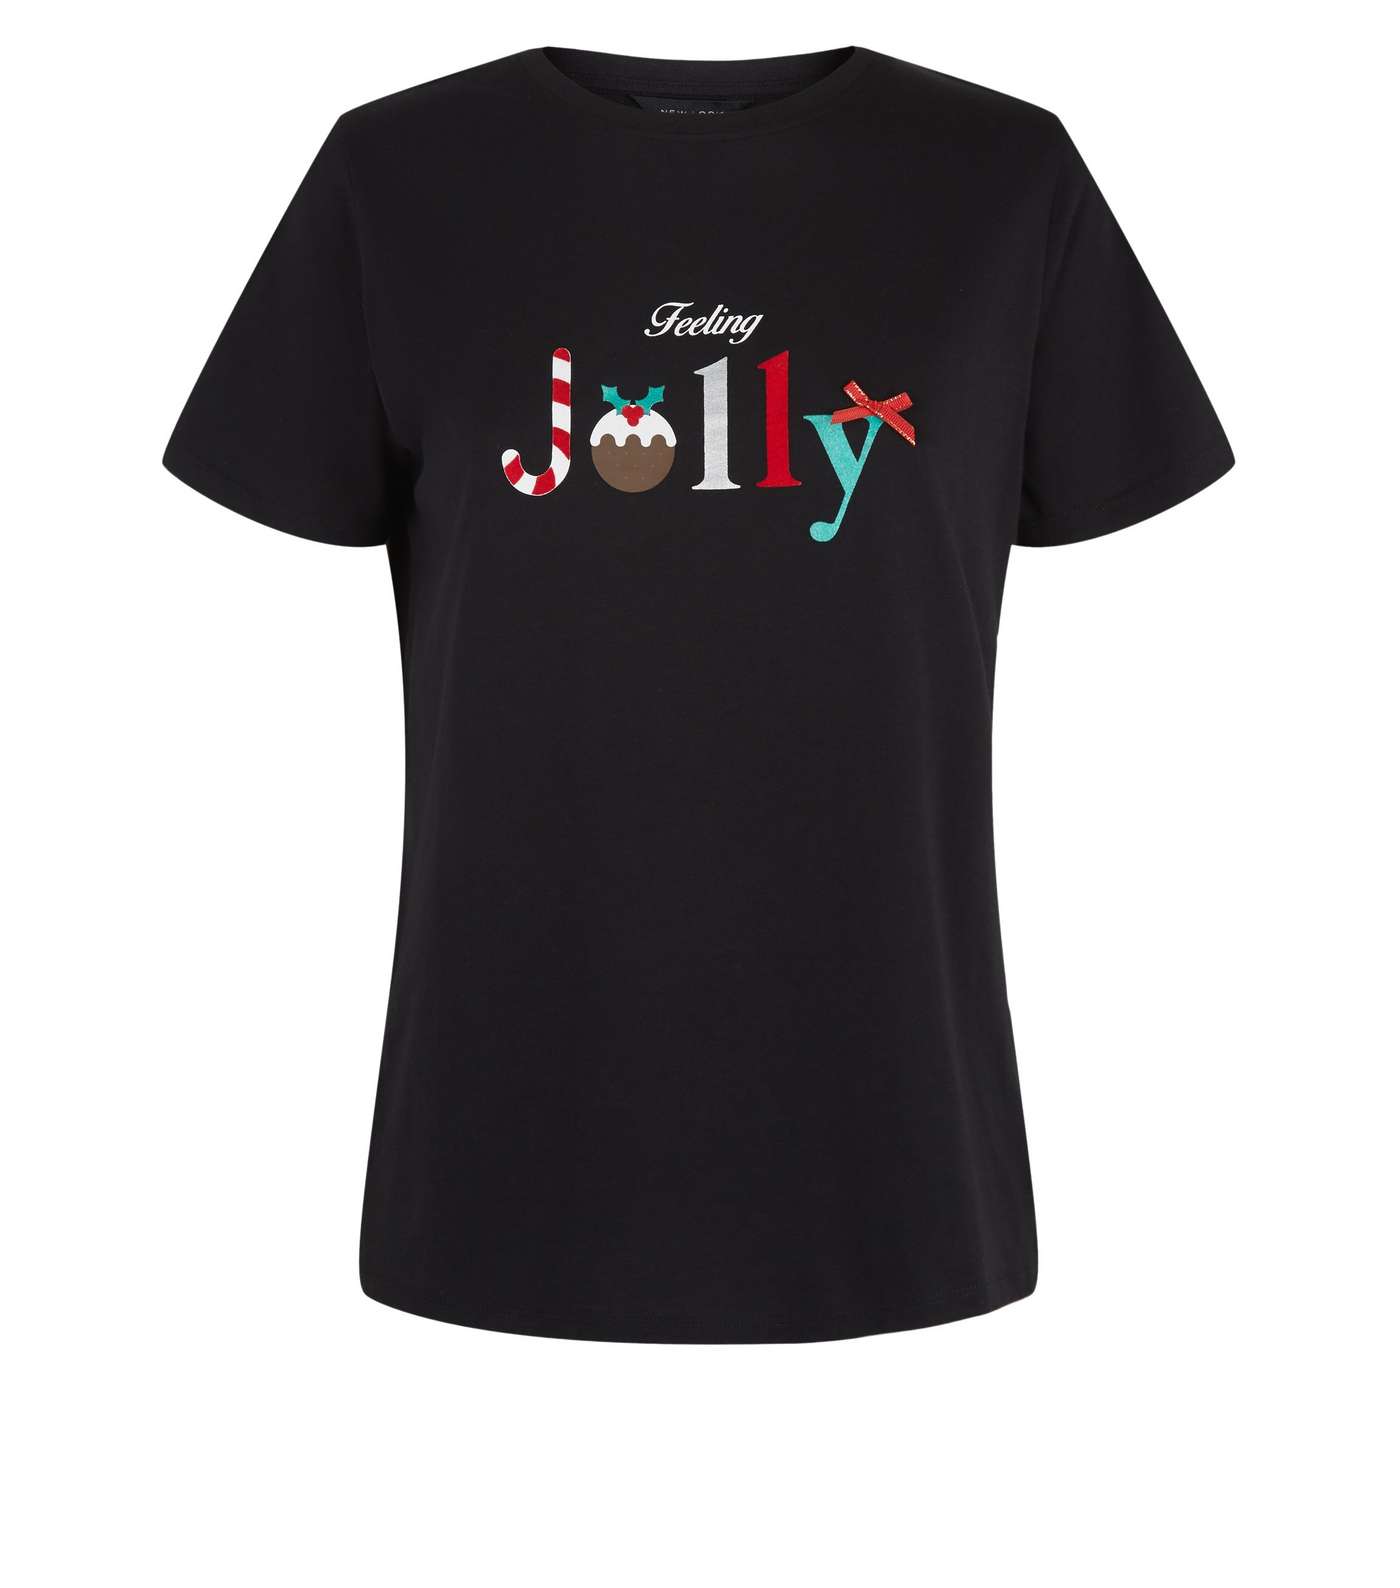 Black Christmas Feeling Jolly Slogan T-Shirt Image 4